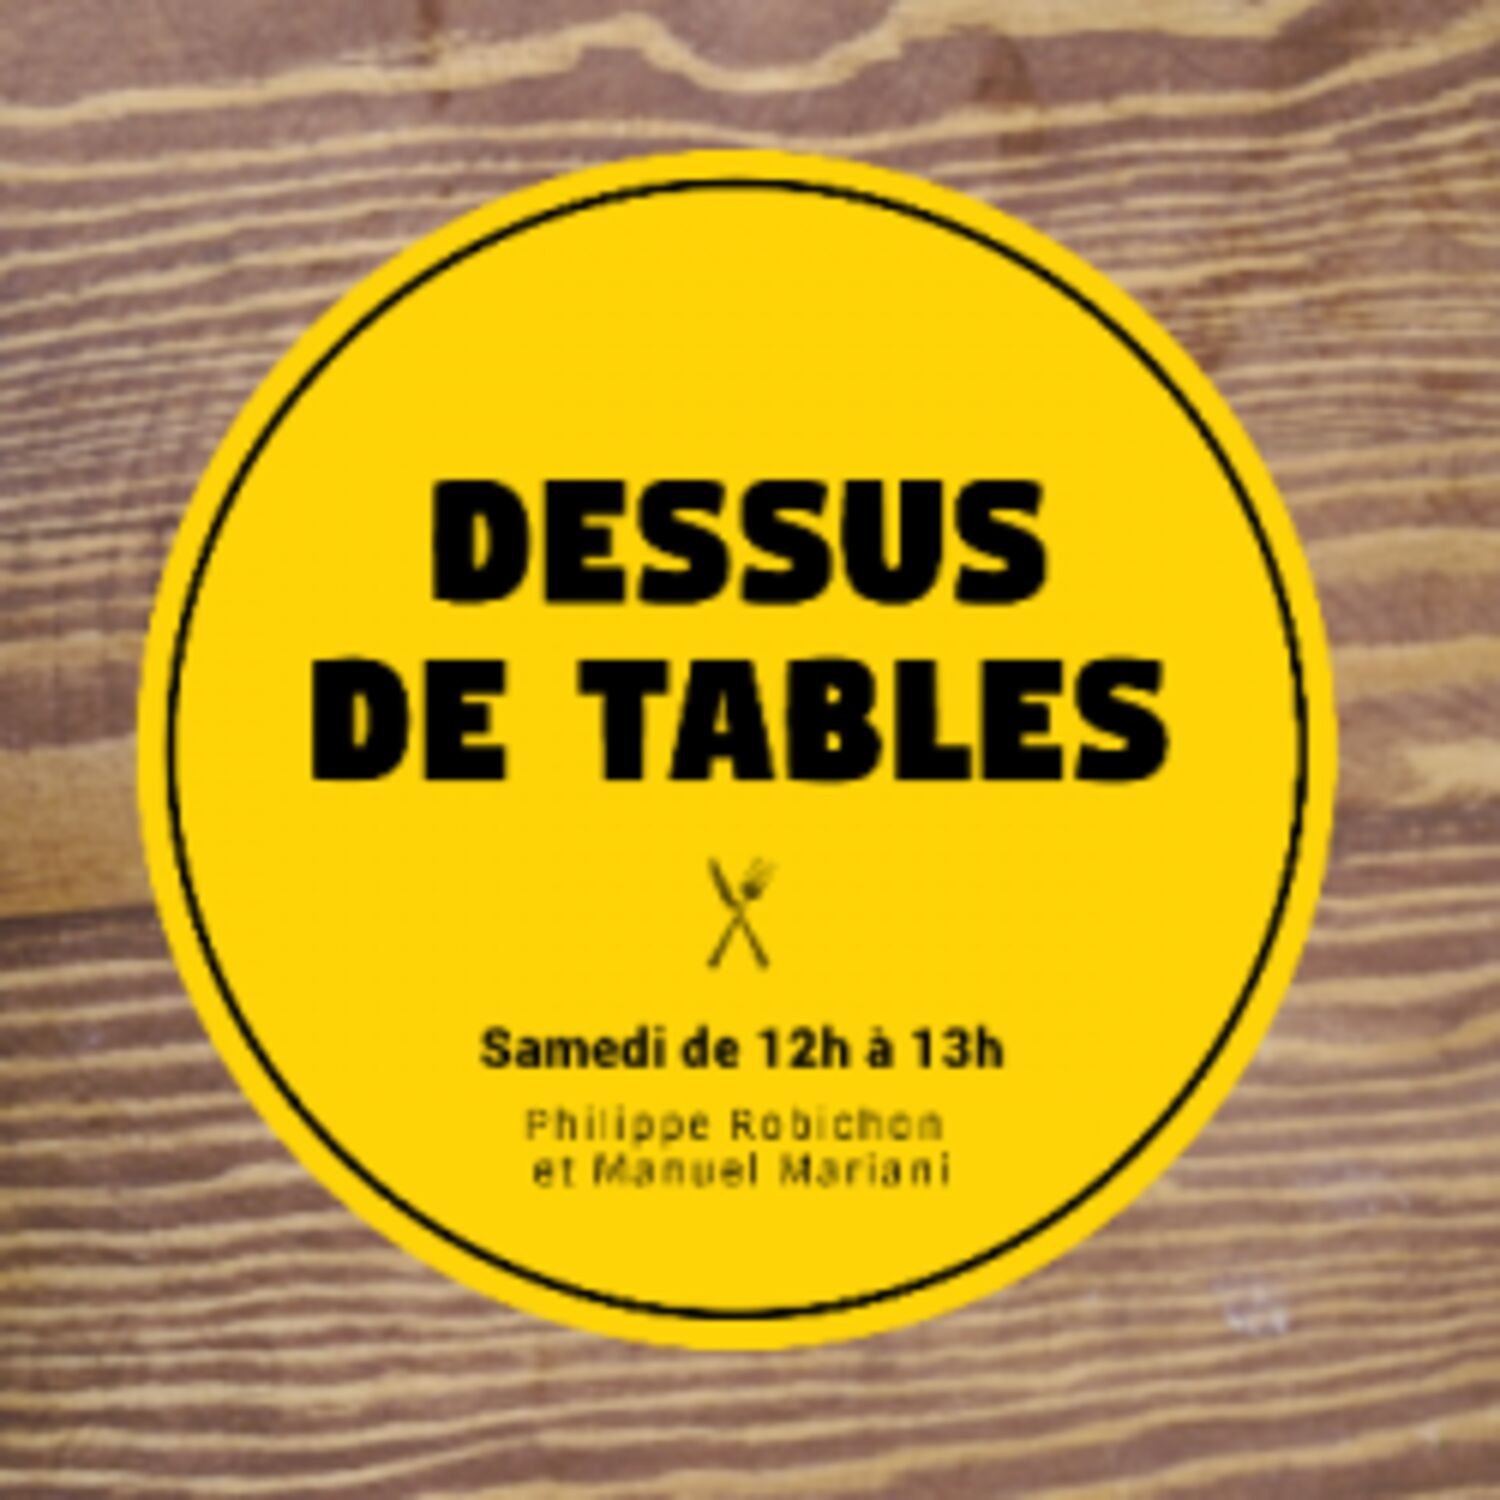 Dessus de tables 27-03-2021